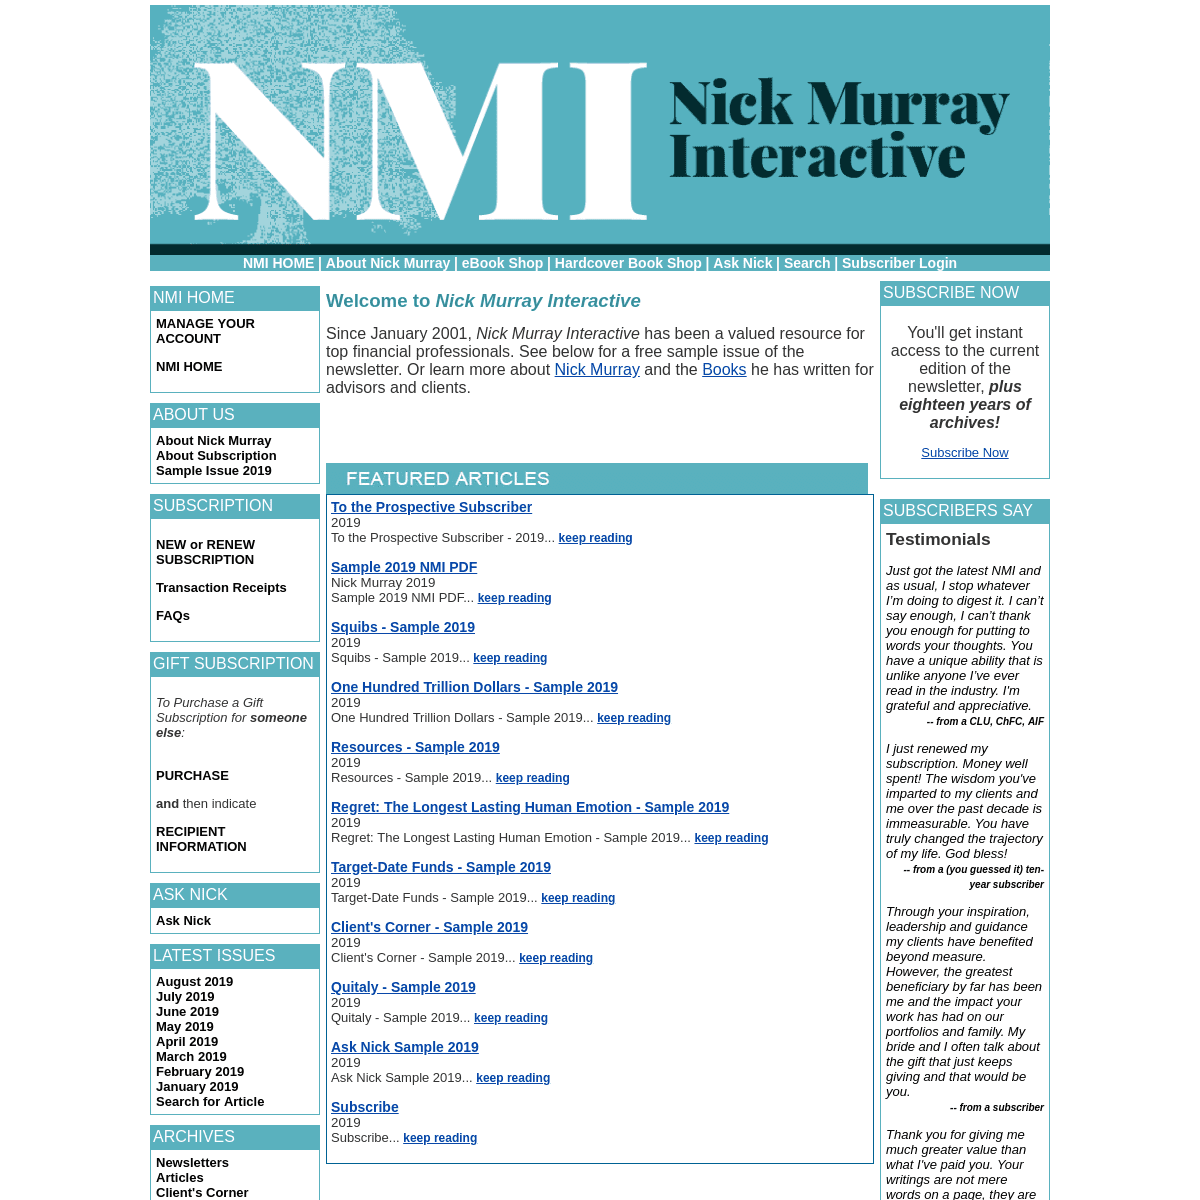 NickMurrayNewsletters.com